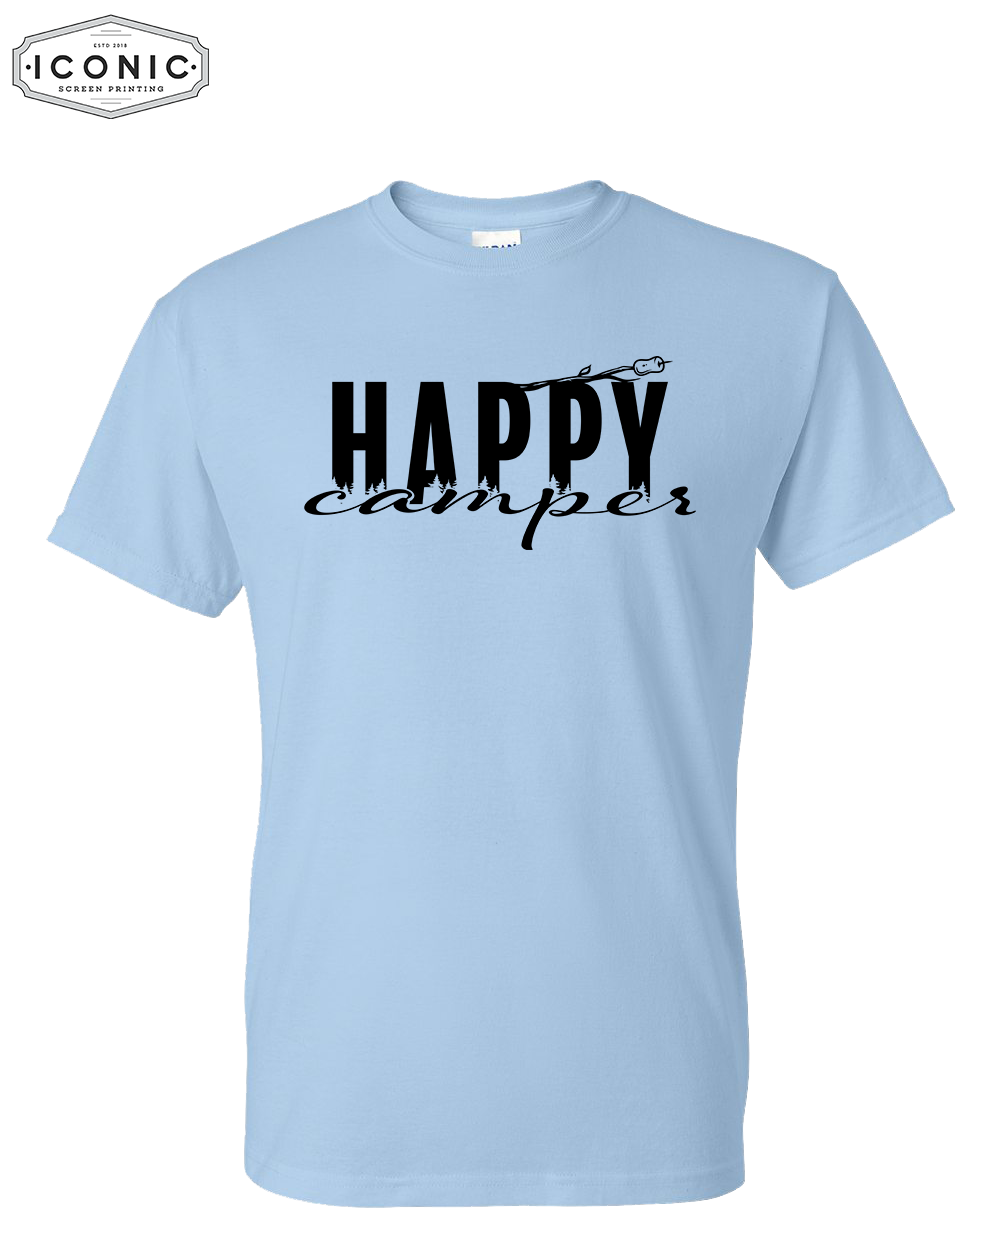 Happy Camper - DryBlend T-Shirt